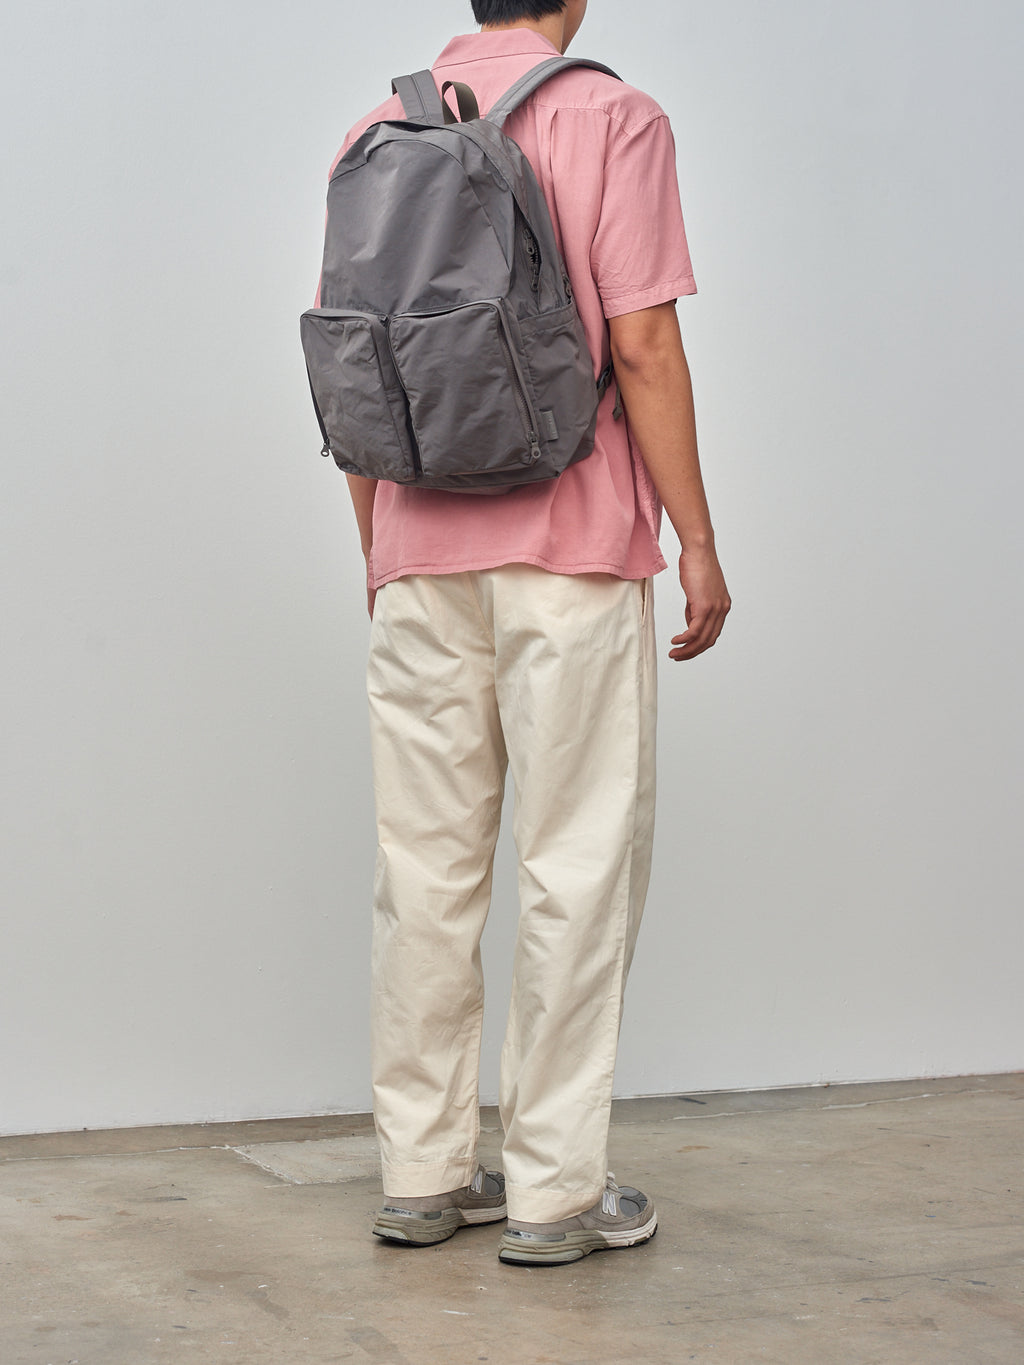 Namu Shop - Amiacalva Split Yarn Backpack - Gray